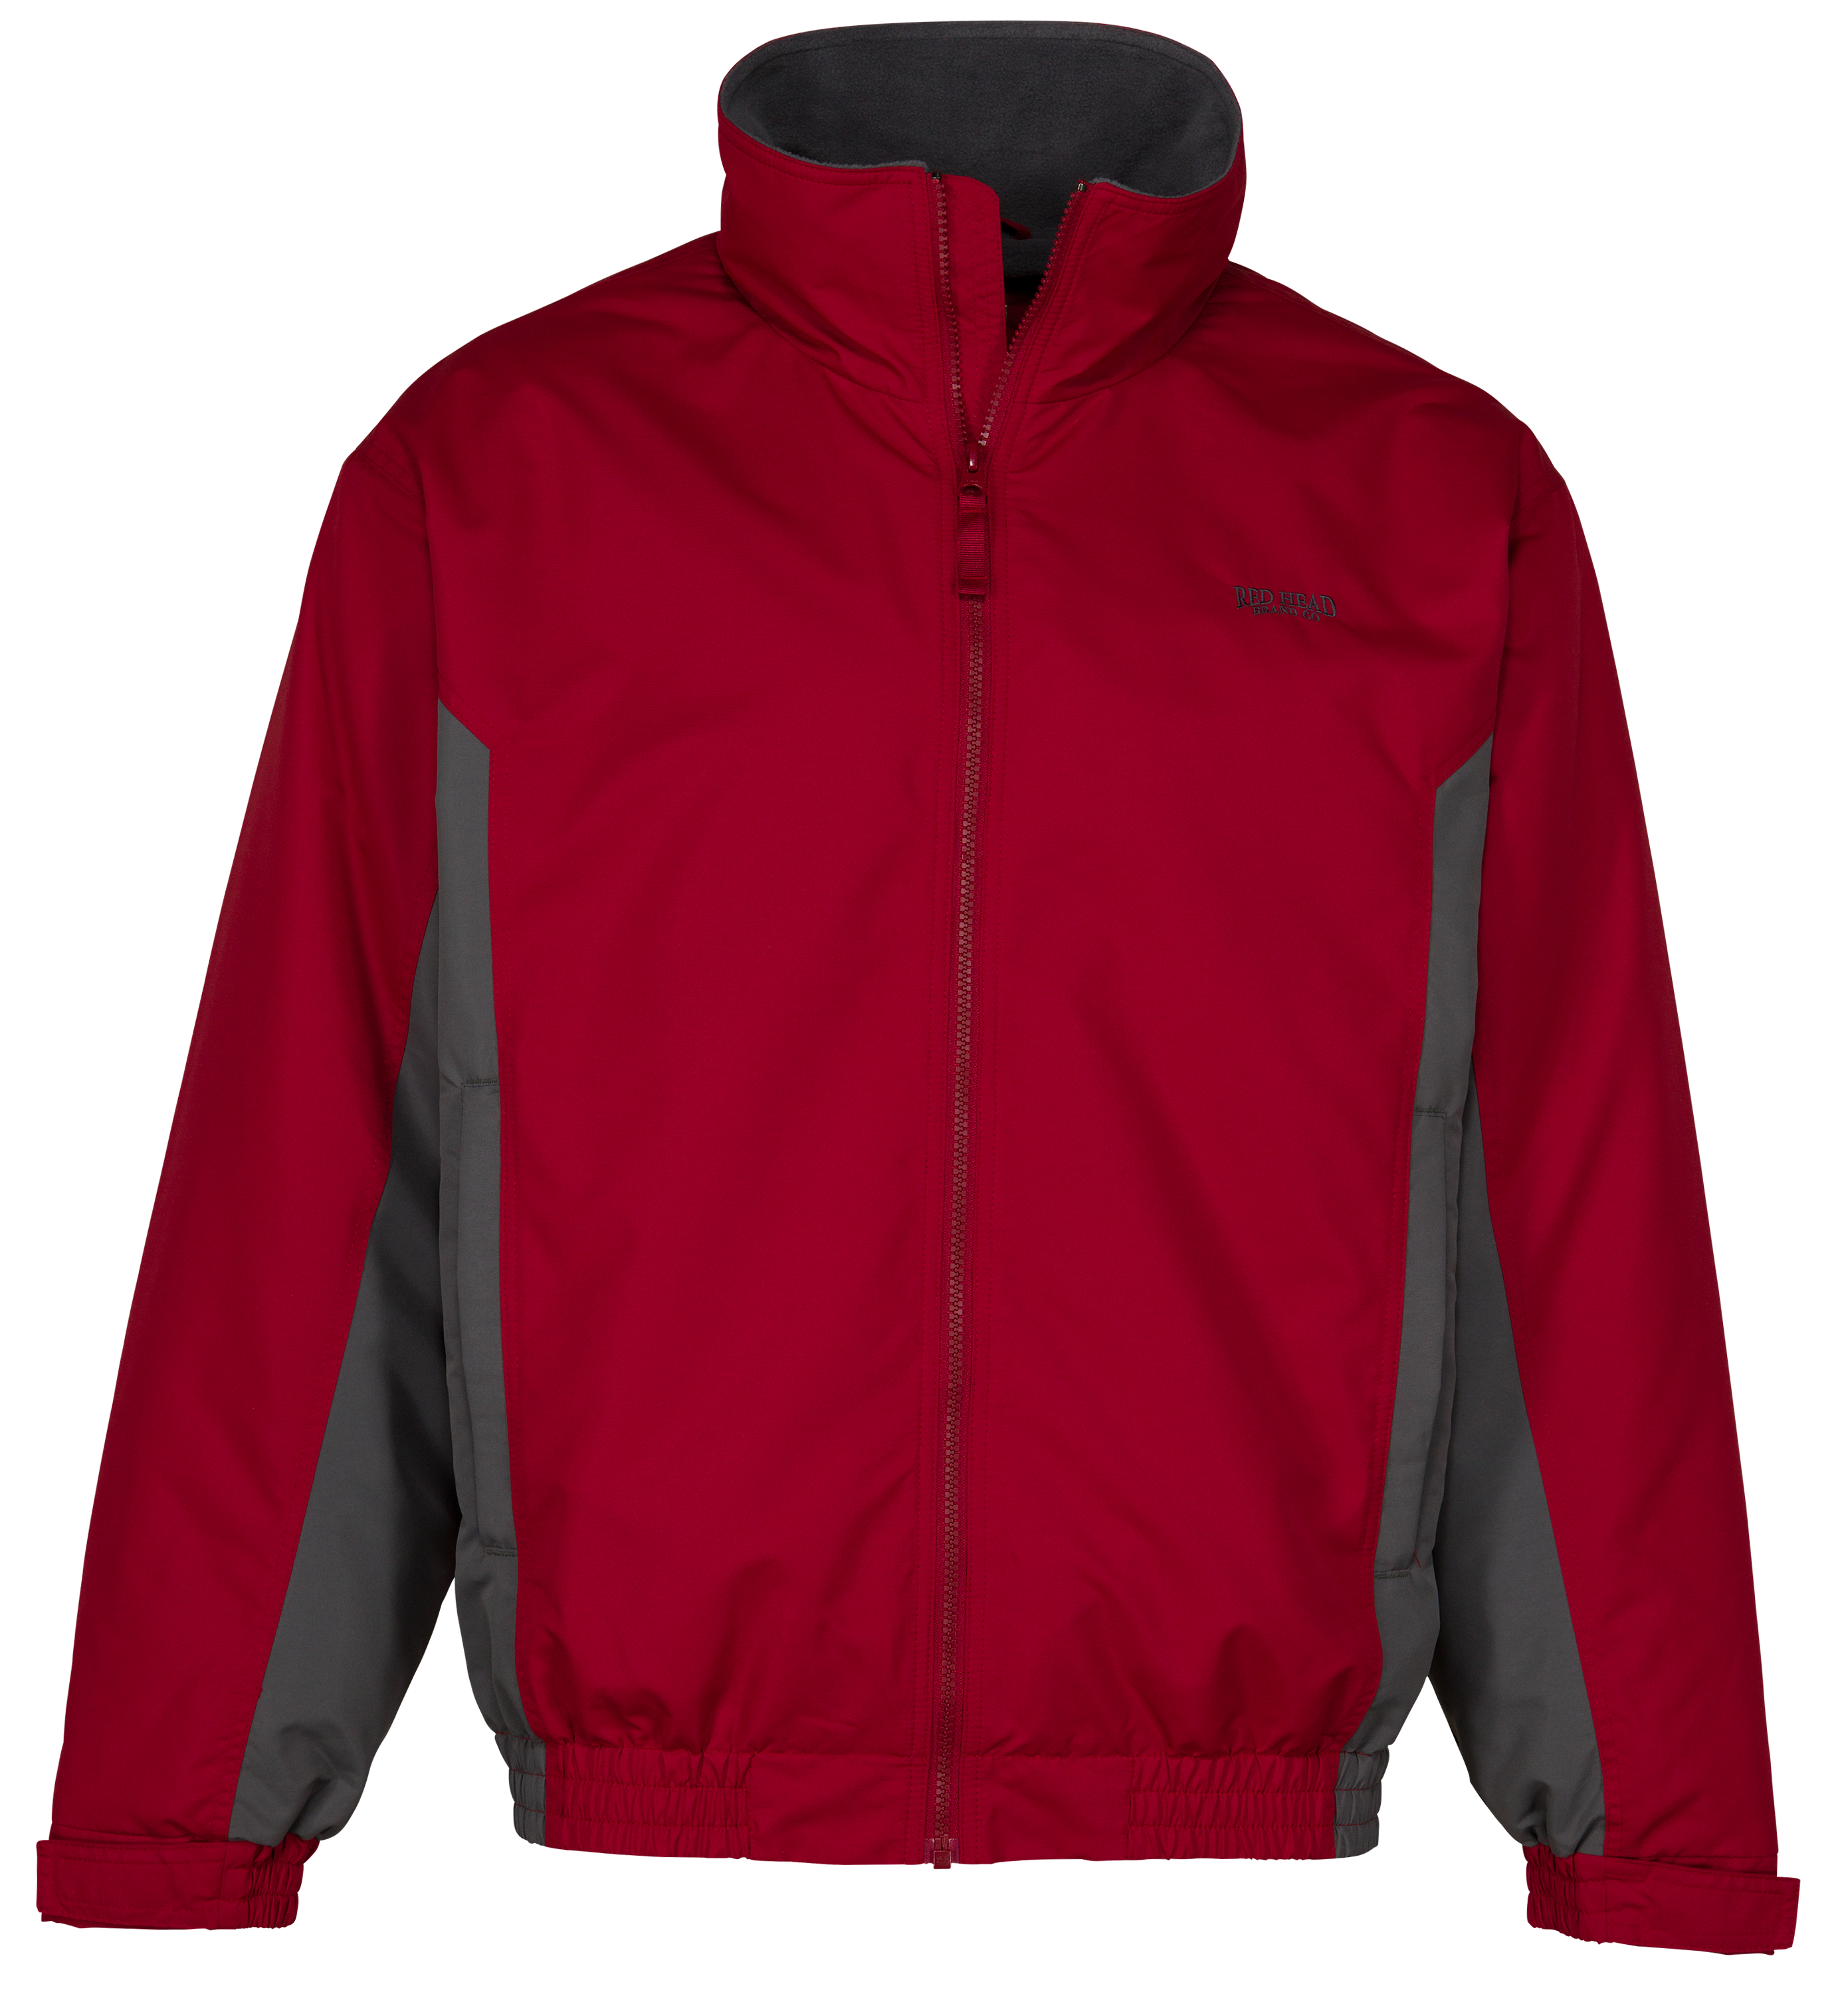 Redhead 3-Season Jacket for Men - Black/Grey - S